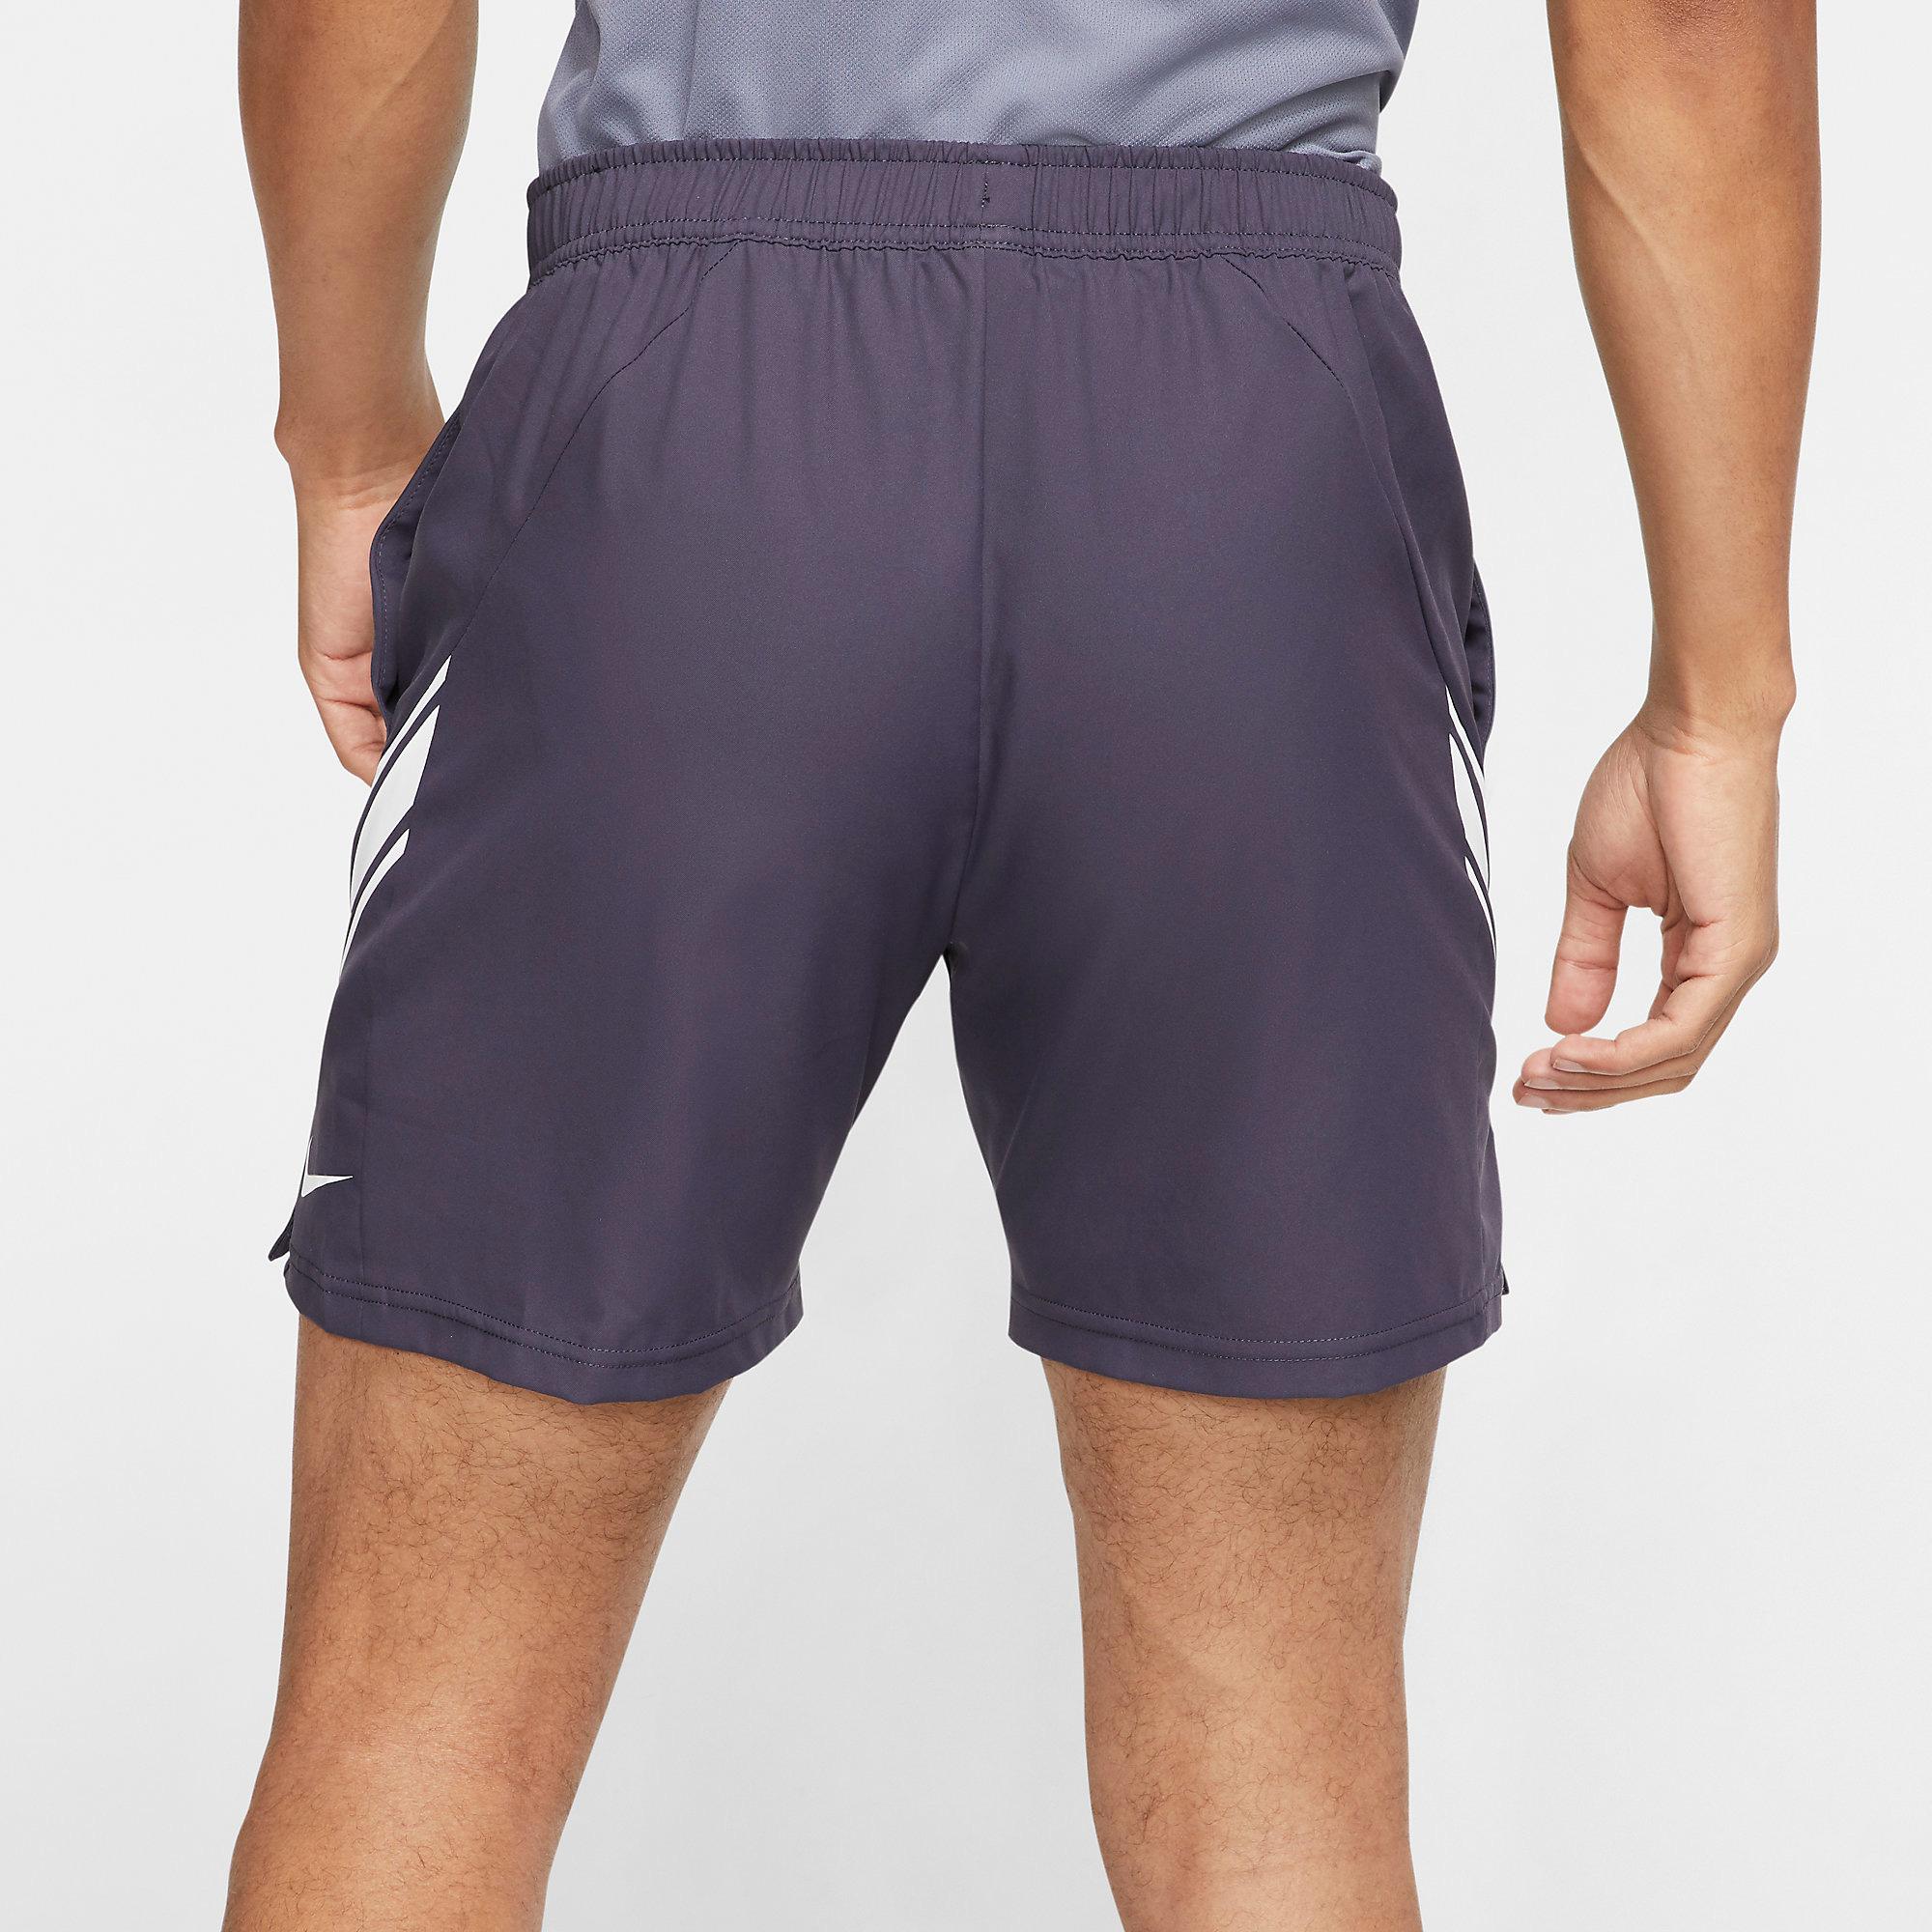 Nike Mens Dri-FIT 7 Inch Tennis Shorts - Gridiron/White - Tennisnuts.com